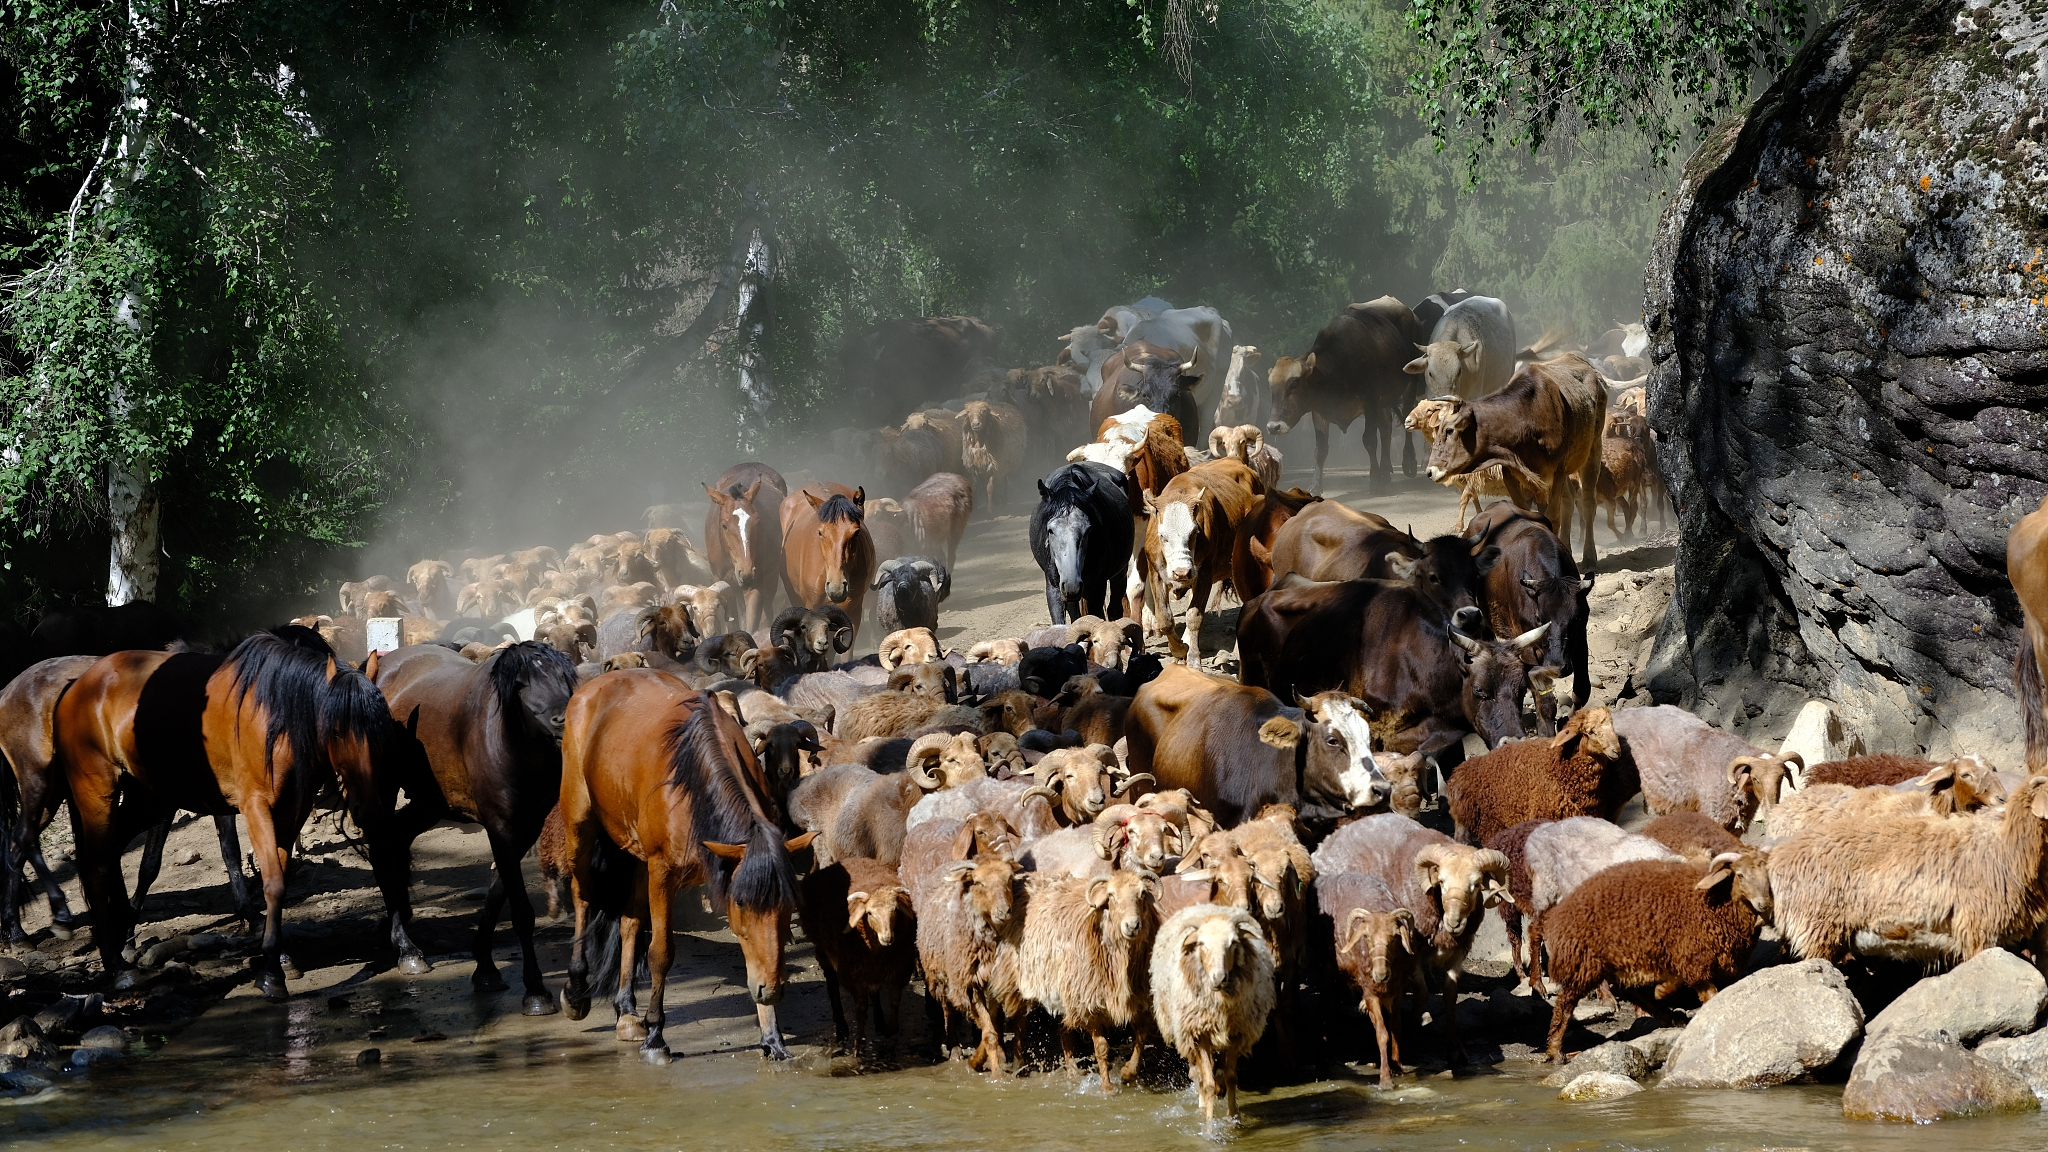 Summer livestock migration underway in Altay, Xinjiang